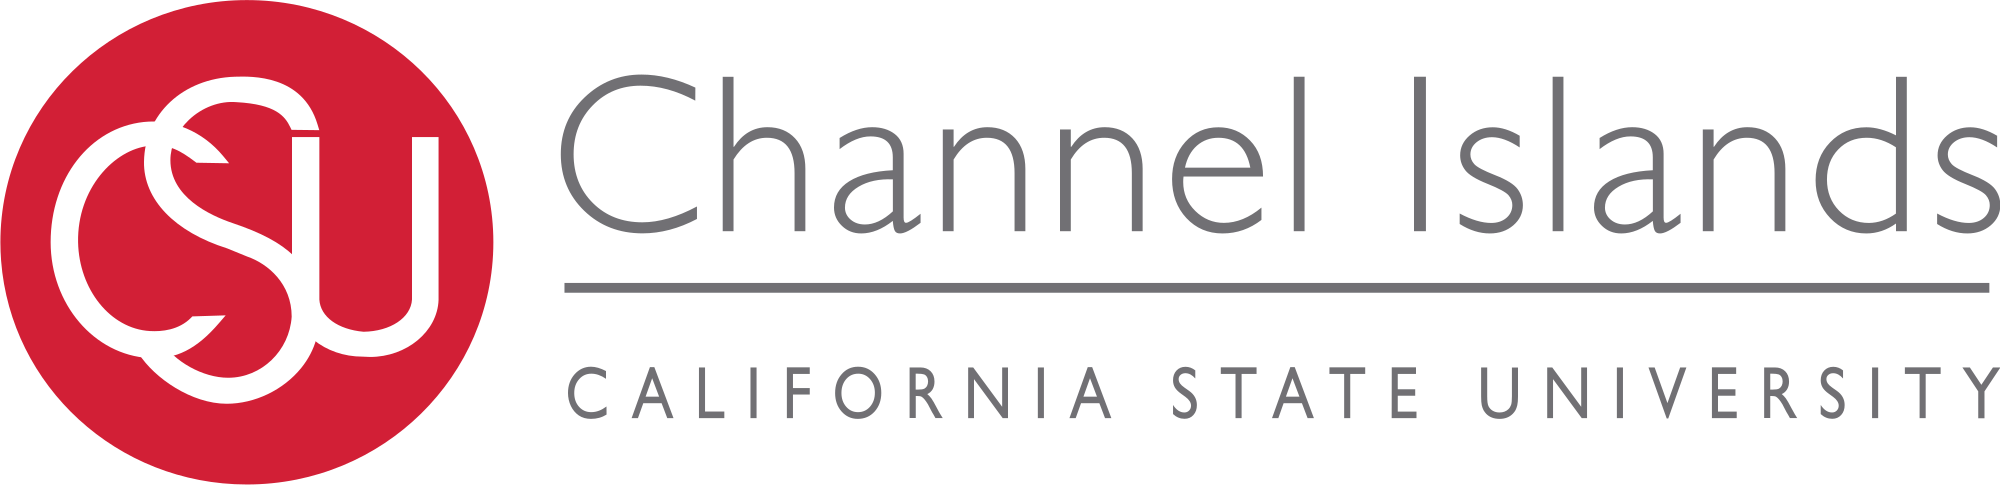 California State University – Channel Islands